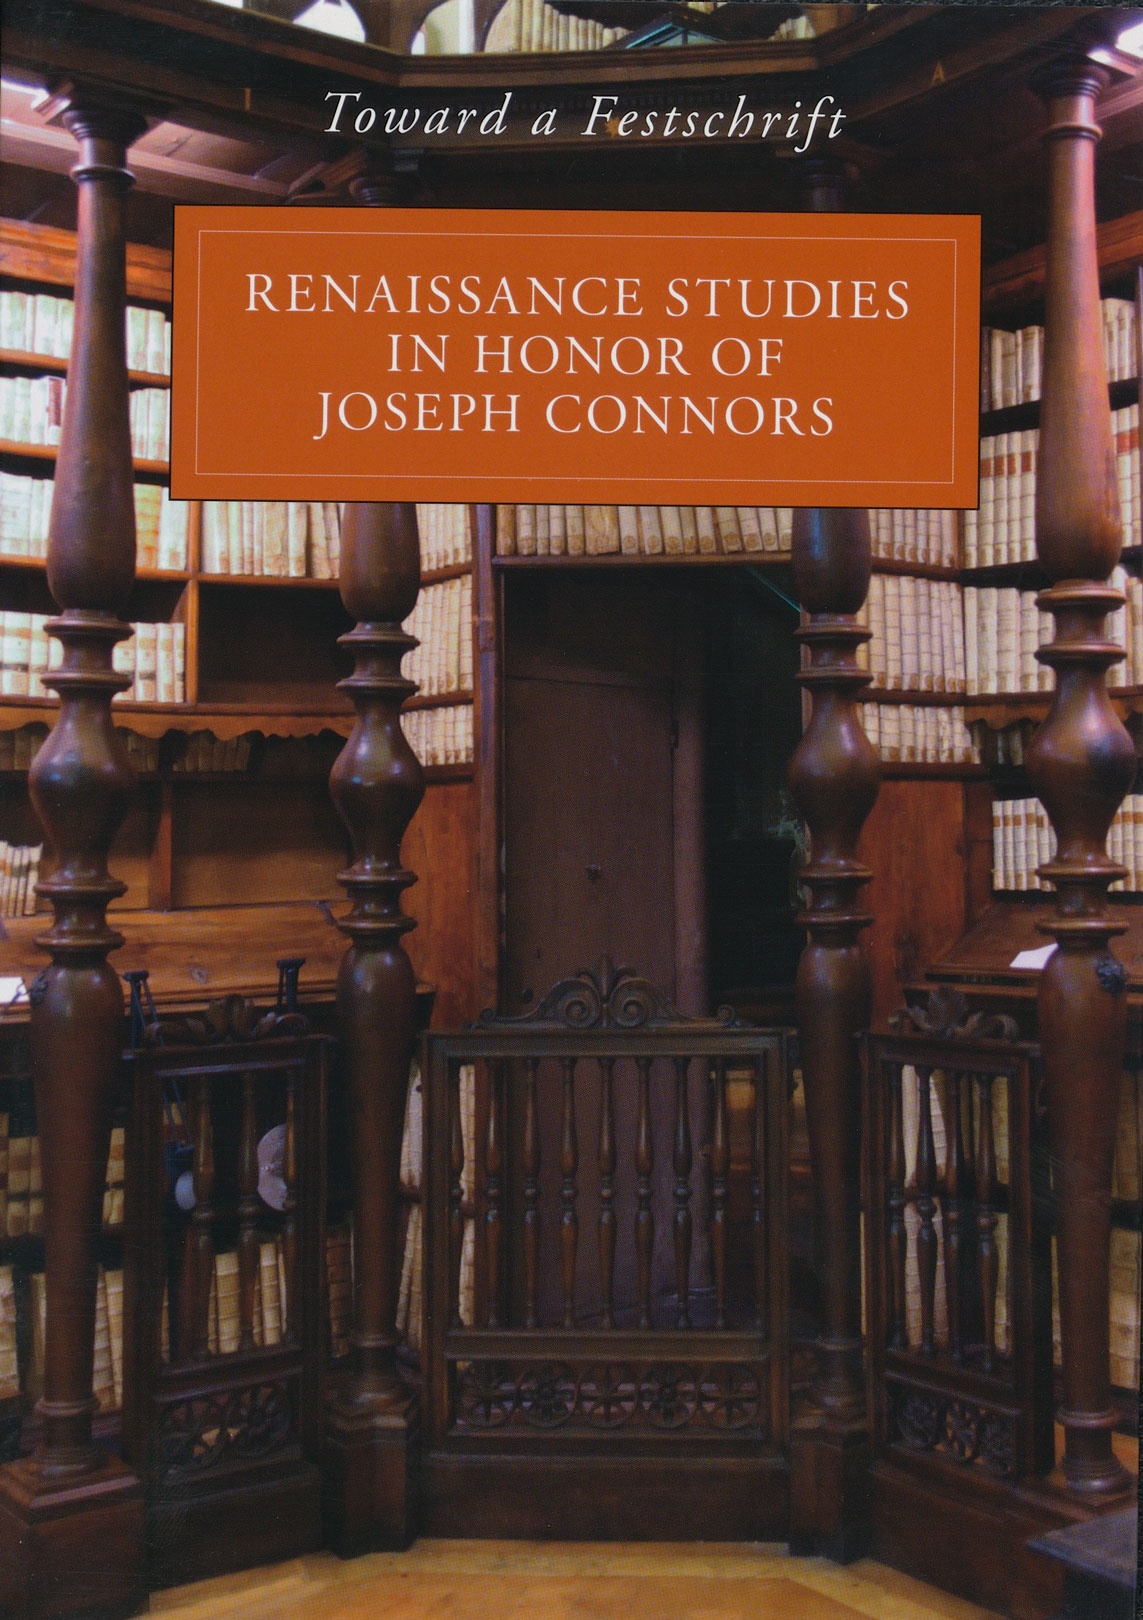 Renaissance studies in honor of Joseph Connors: toward a Festschrift